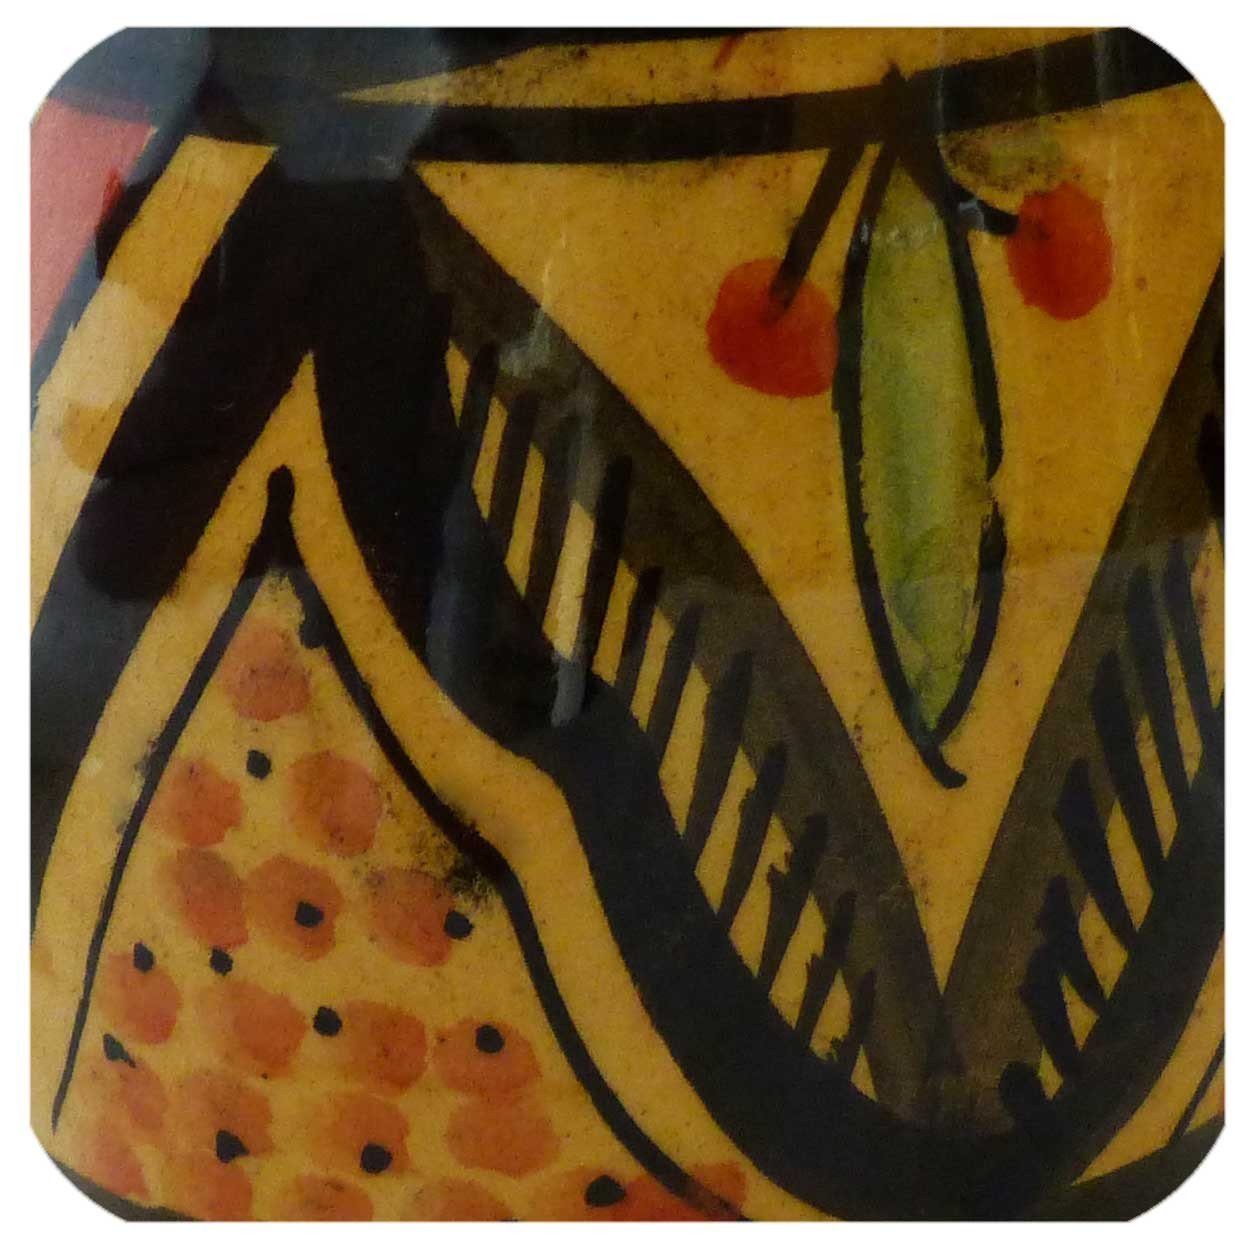 SIMANDRA Groß, Tasse Keramik, handarbeit Keramiktasse Gelb